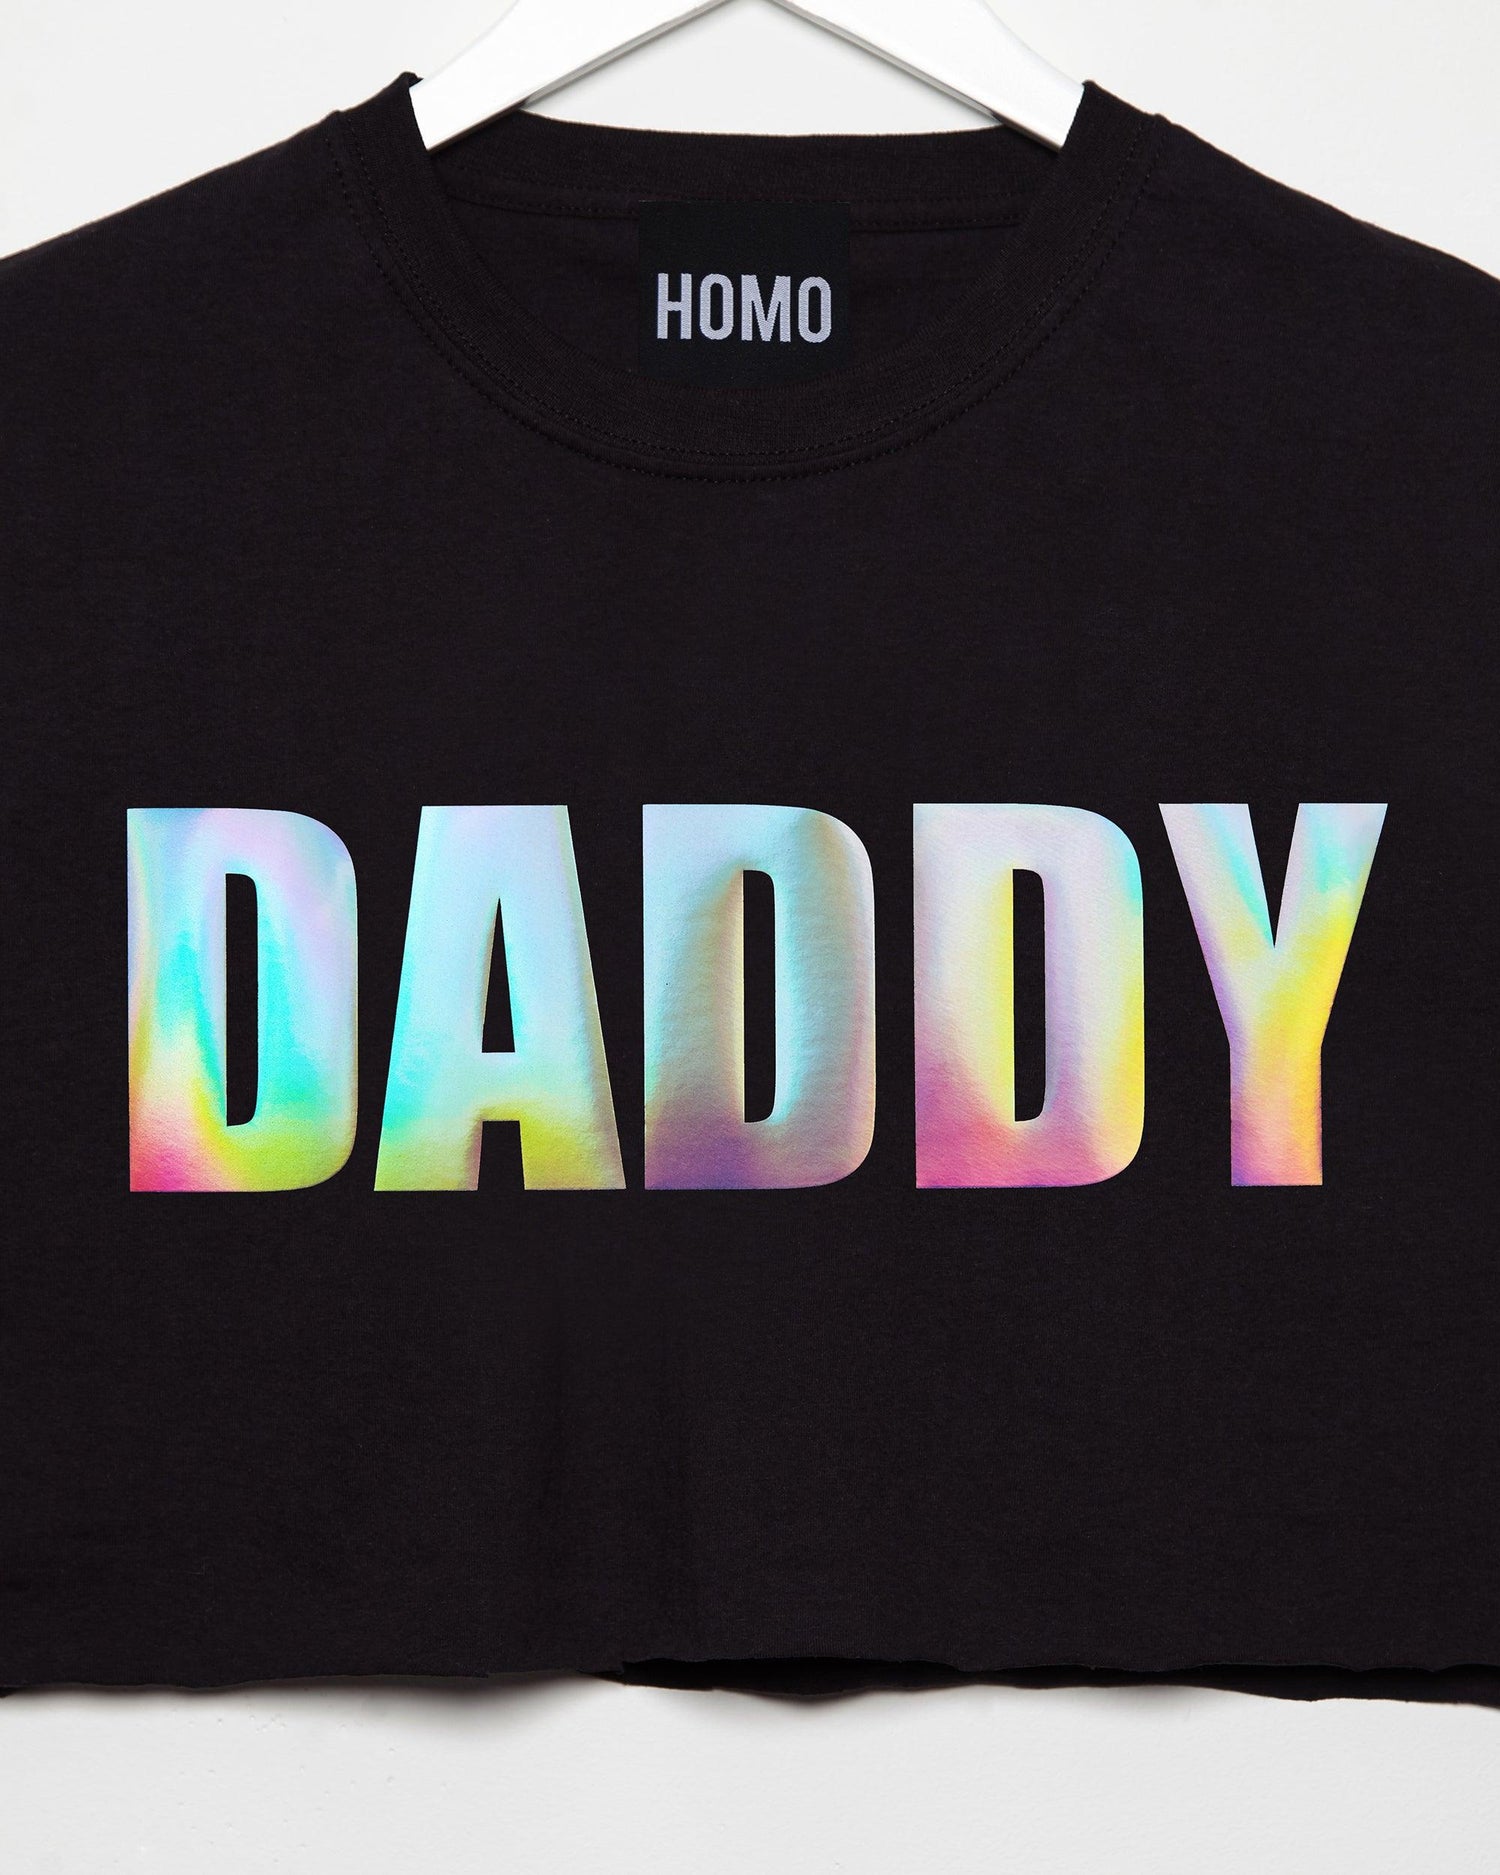 DADDY, hologram on black - mens sleeveless crop top. - HOMOLONDON